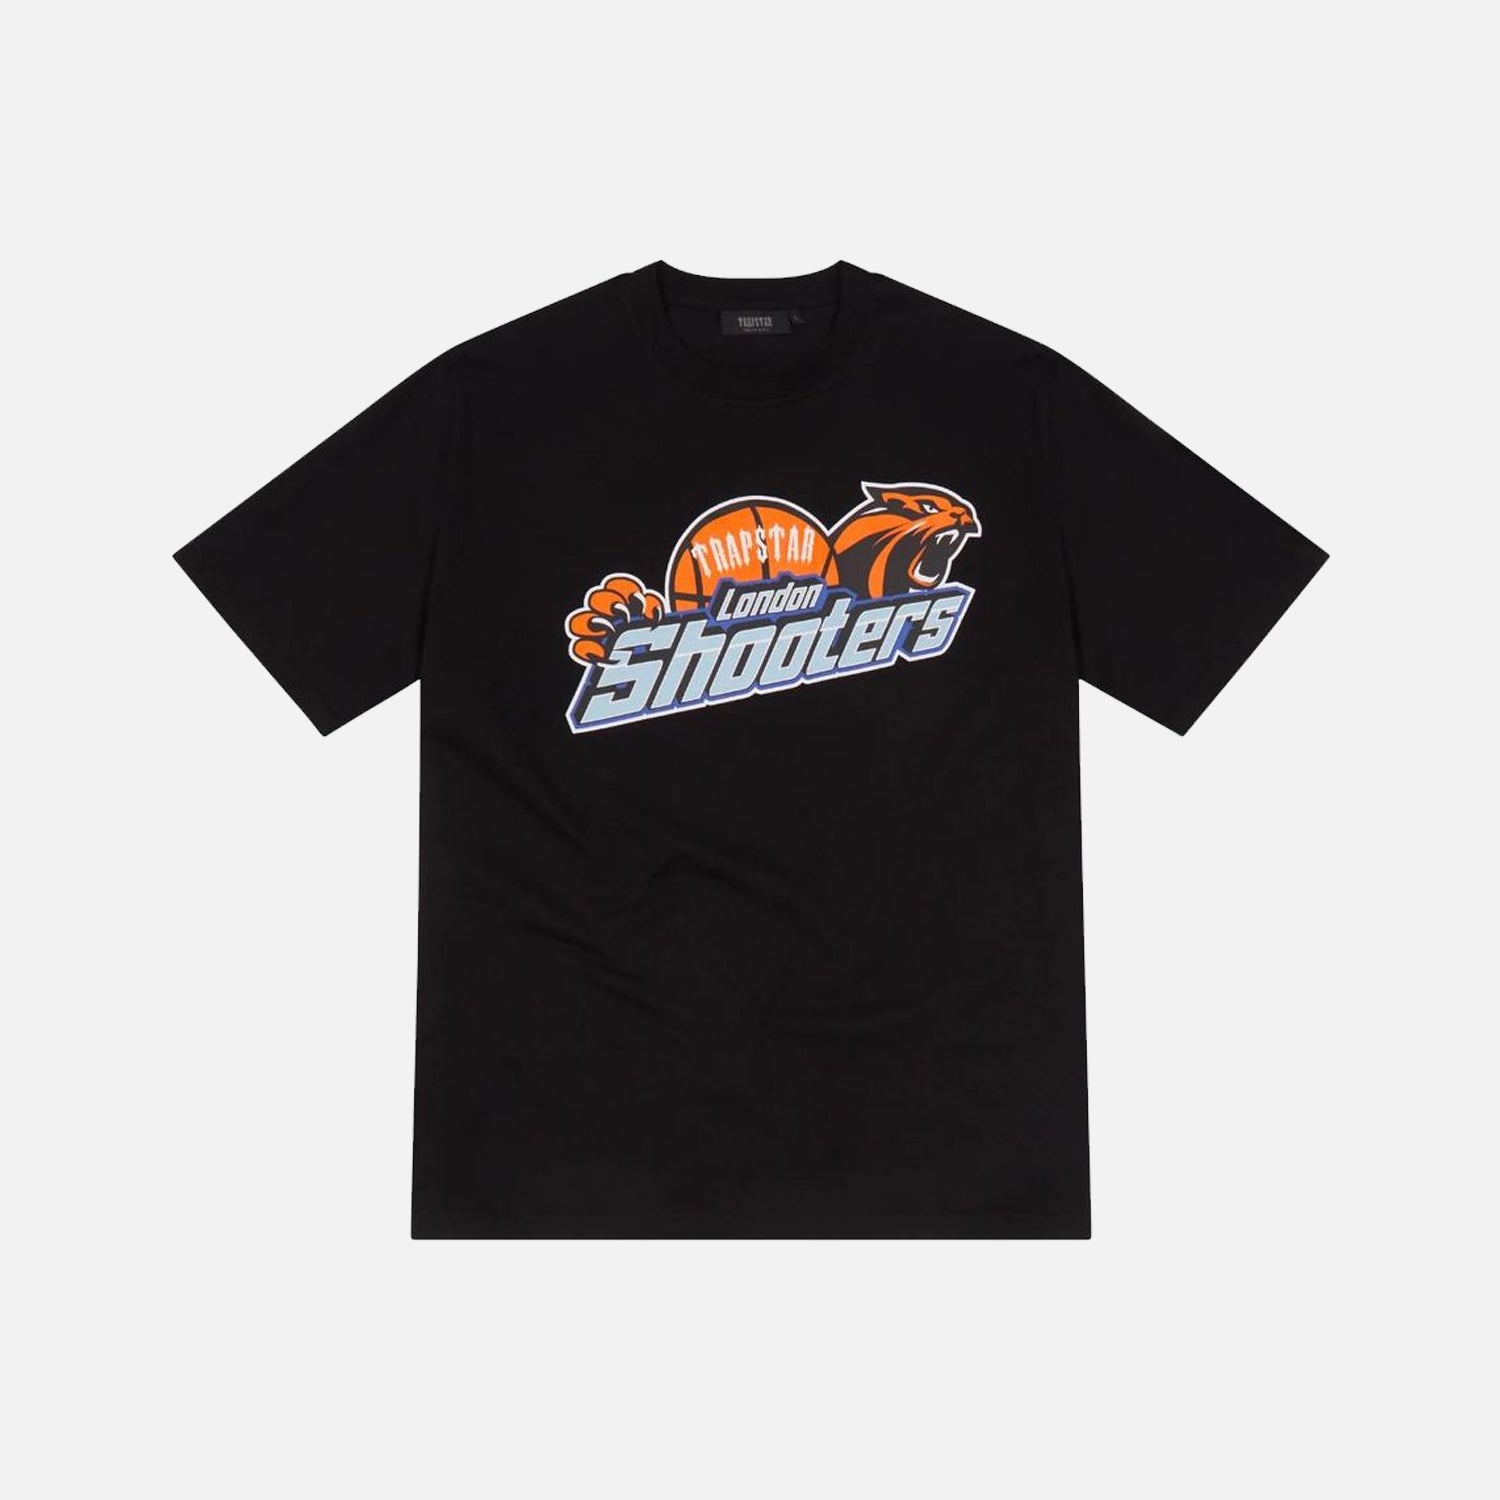 Trapstar Shooters T-Shirt - Black / Orange